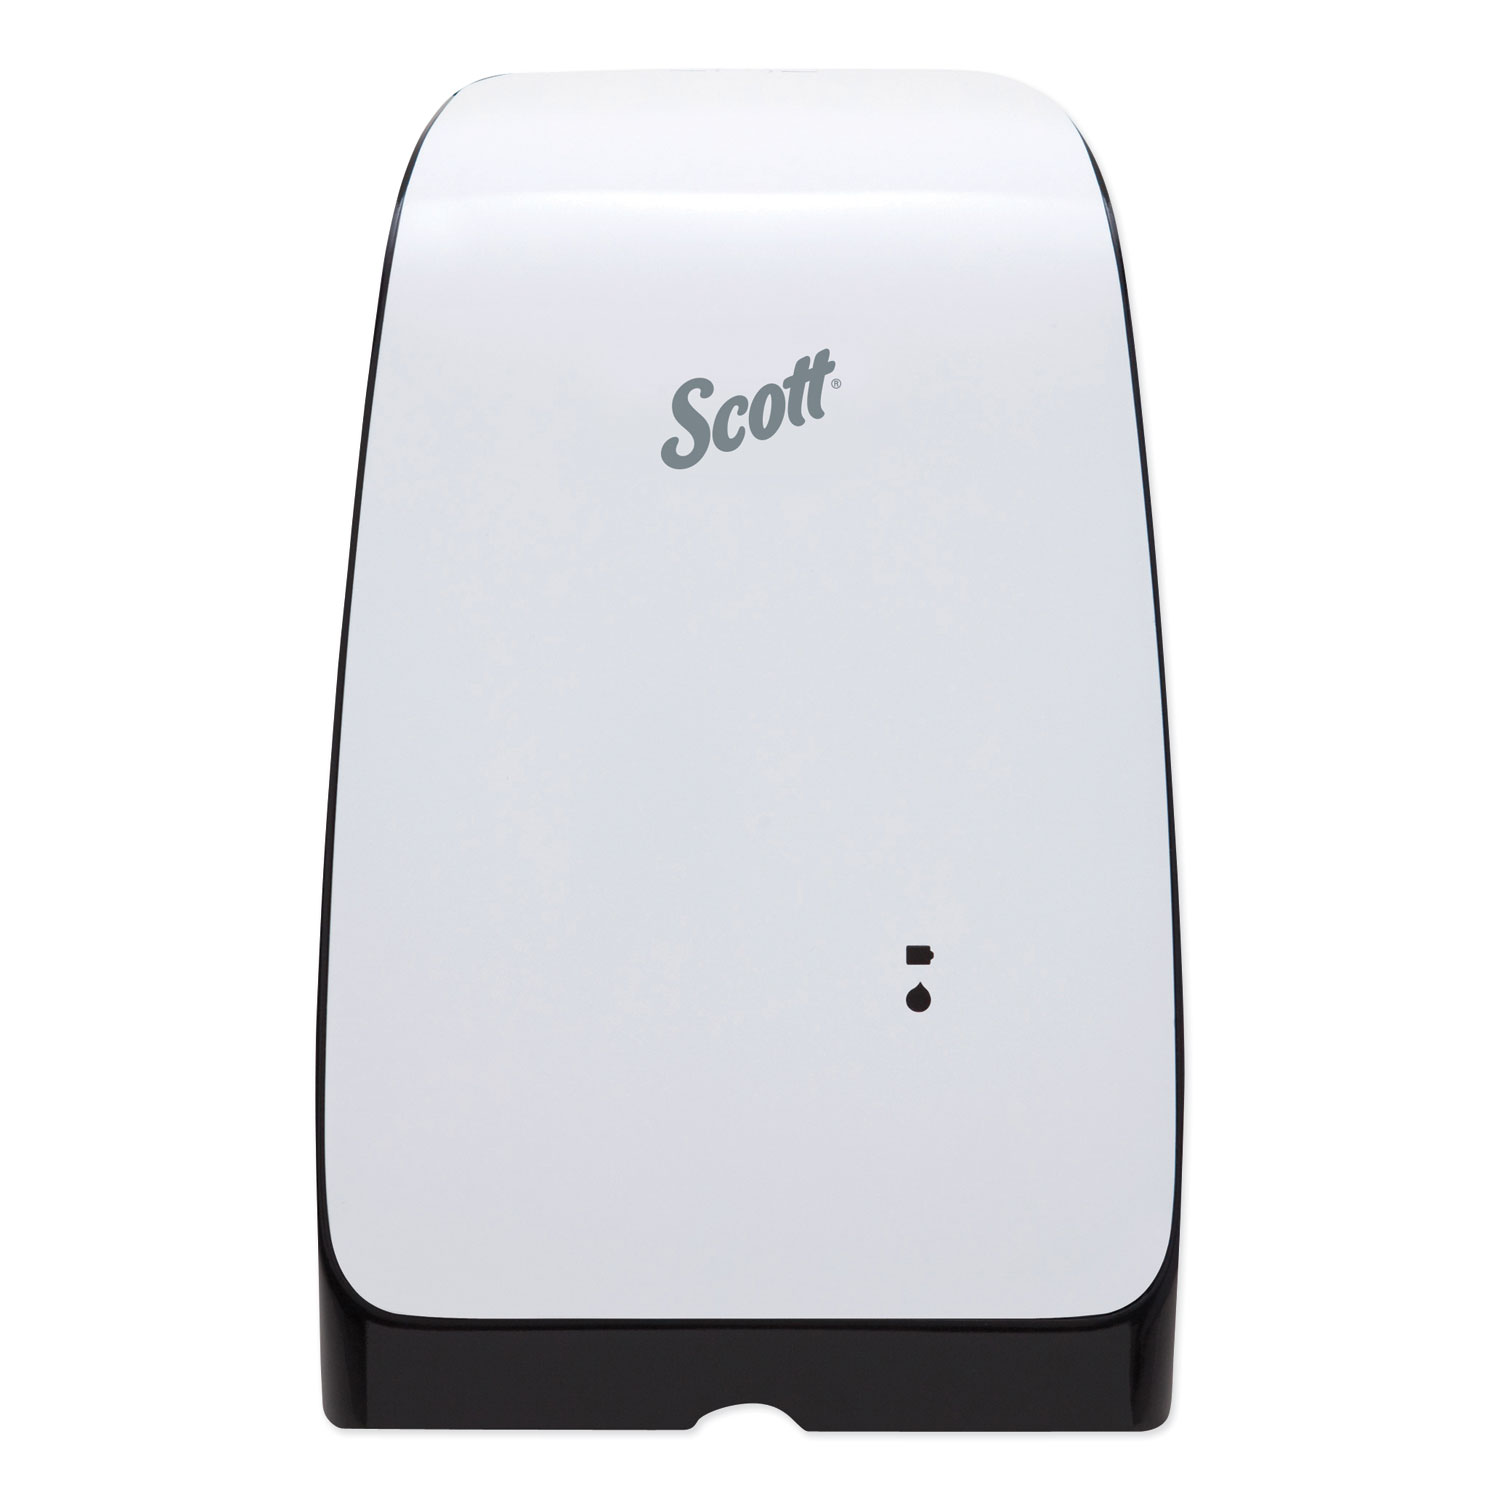  Scott 32499 Electronic Skin Care Dispenser, 1200 mL, 7.3 x 4 x 11.7, White (KCC32499) 